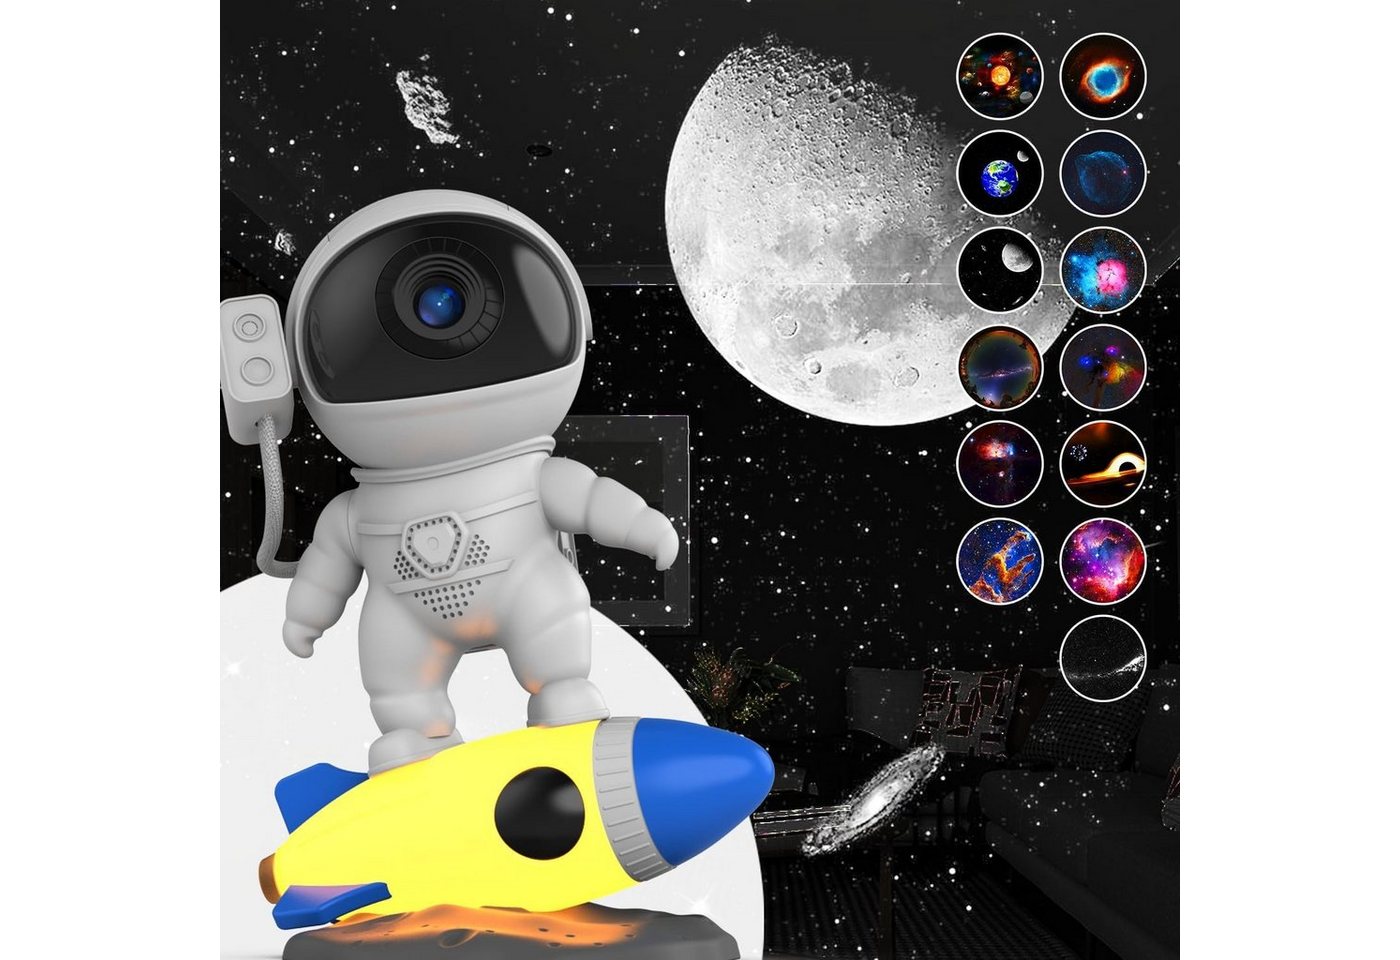 Powerwill Projektionslampe Astronaut Sternenhimmel Projektor mit Nachtlicht, 12 Blatt Film, LED fest integriert, KinderNachtlicht,USB-Ladung, LED Sternenhimmel Lampe, Magnetisches Ansaug-Design, 360° drehbare Astronaut Projektor Kinder von Powerwill